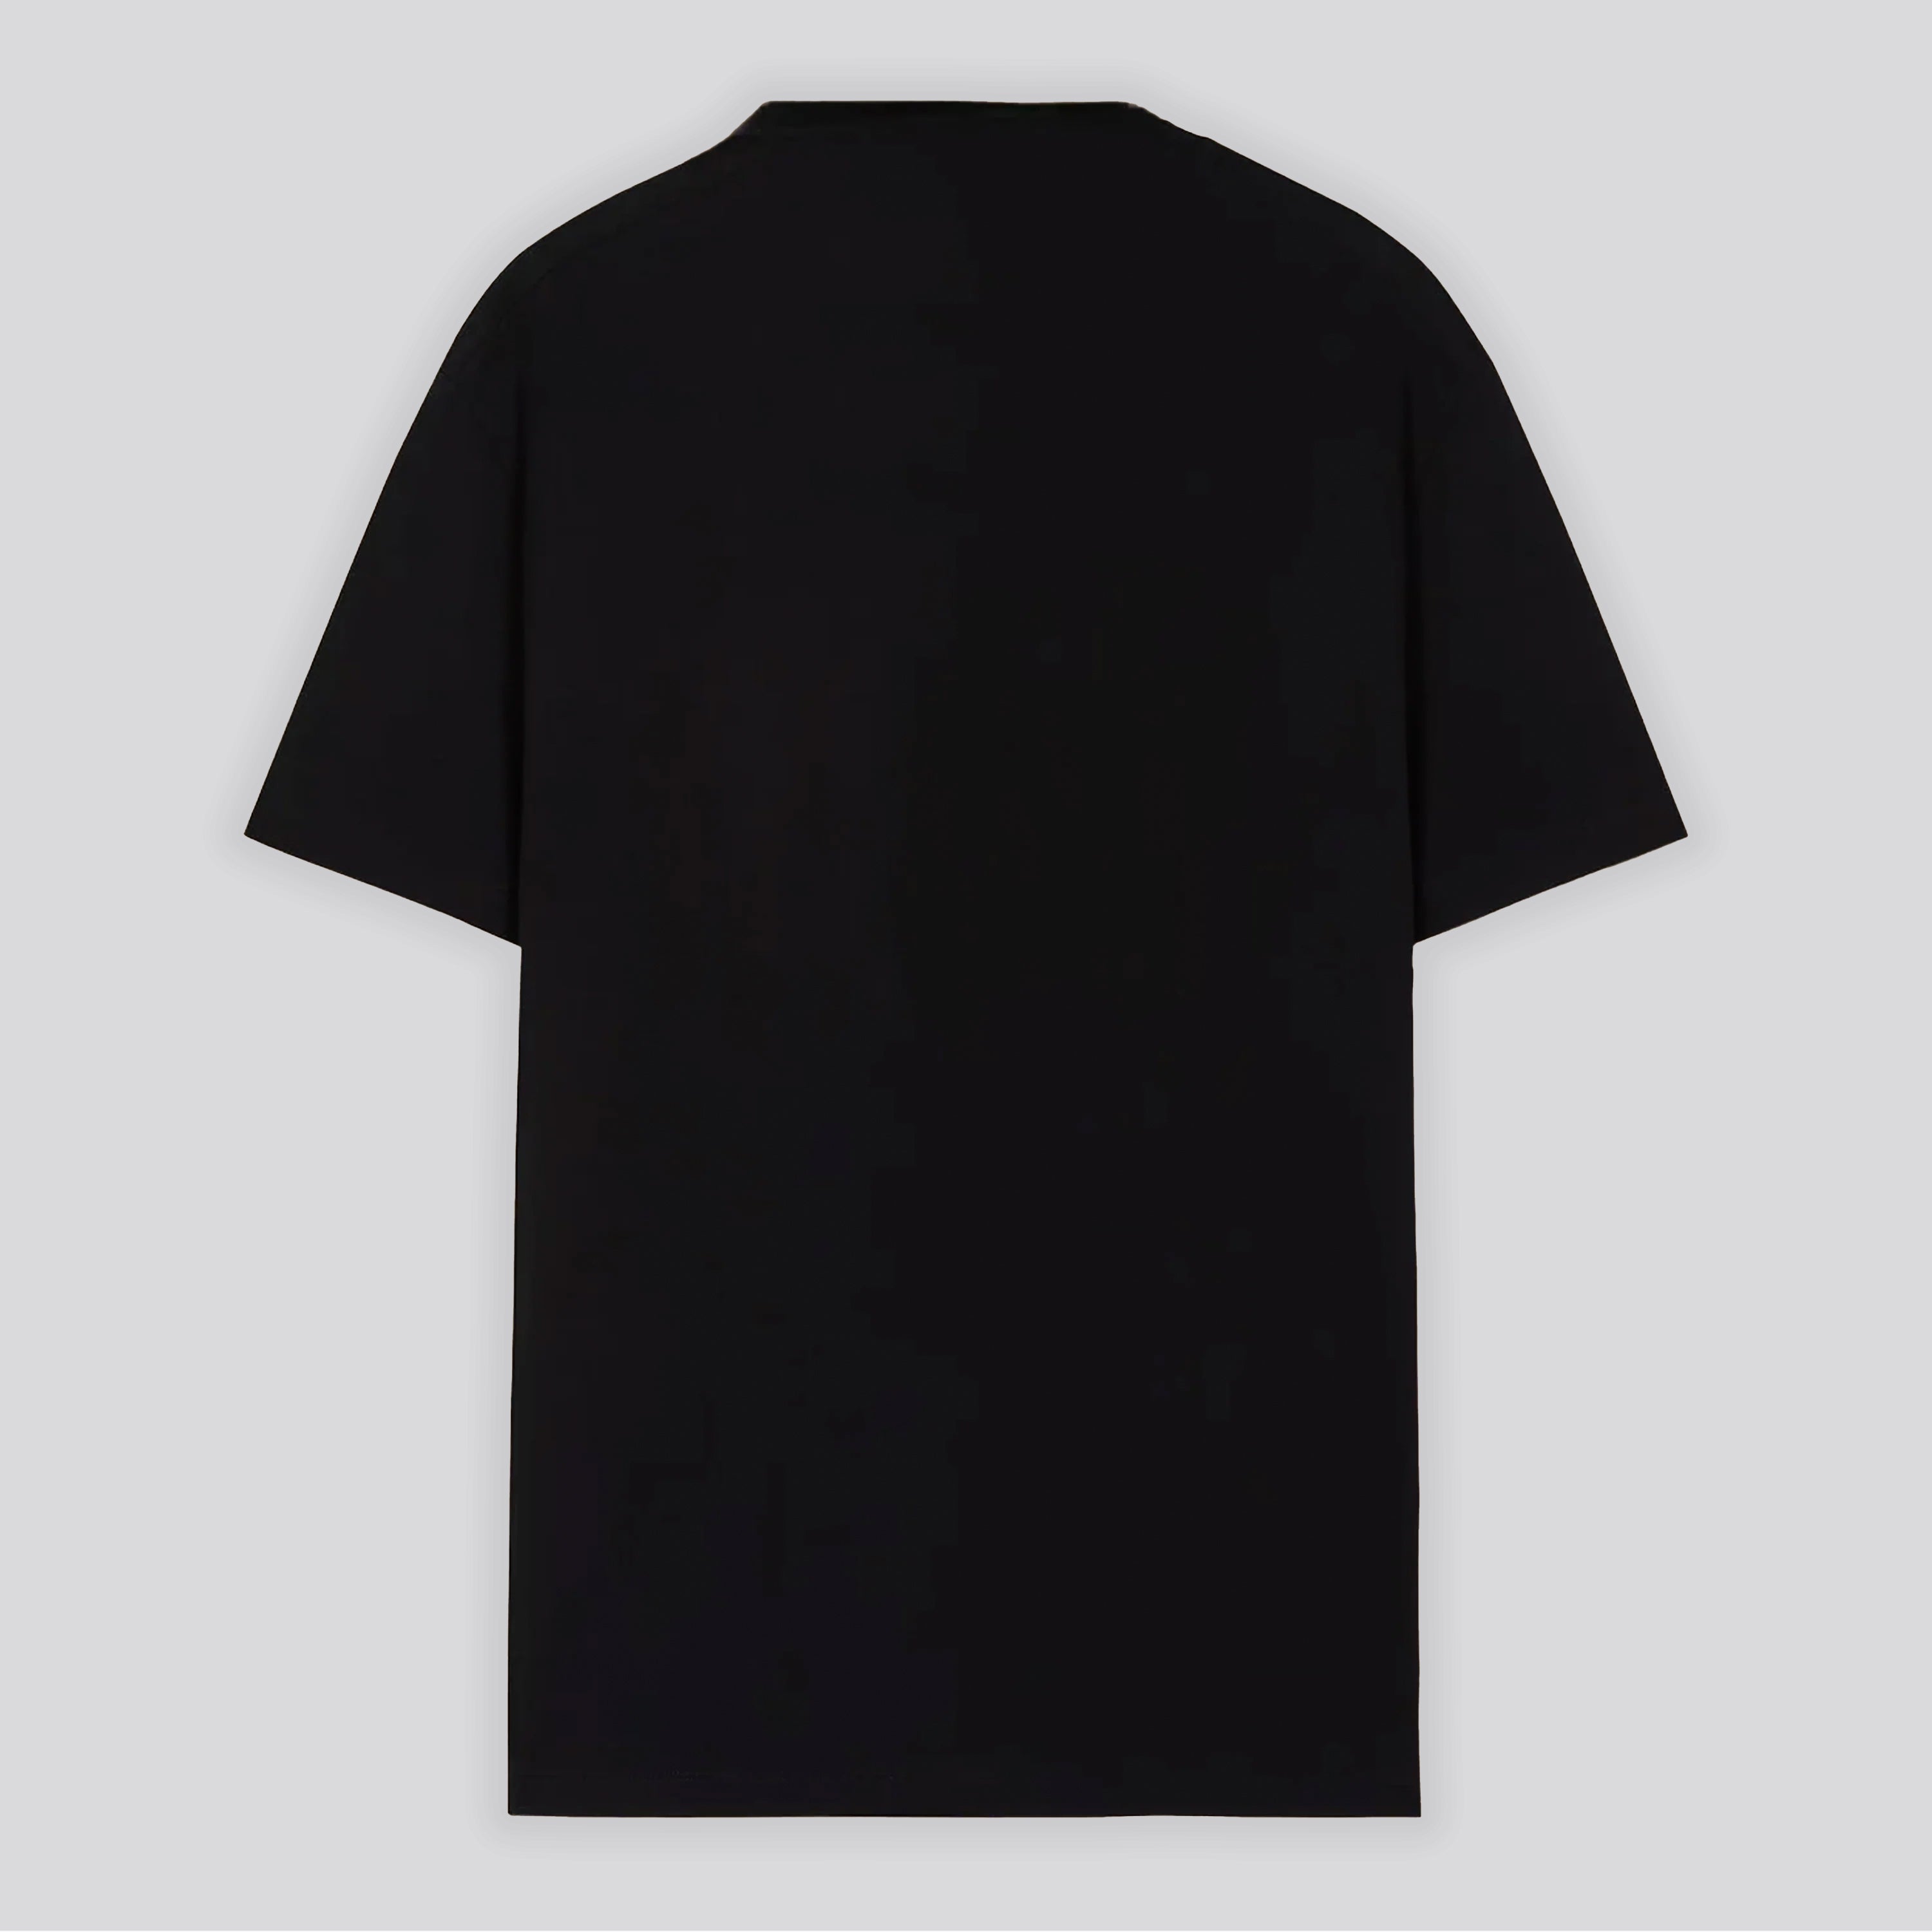 Camiseta negra, ropa, camiseta, ropa de hombre png